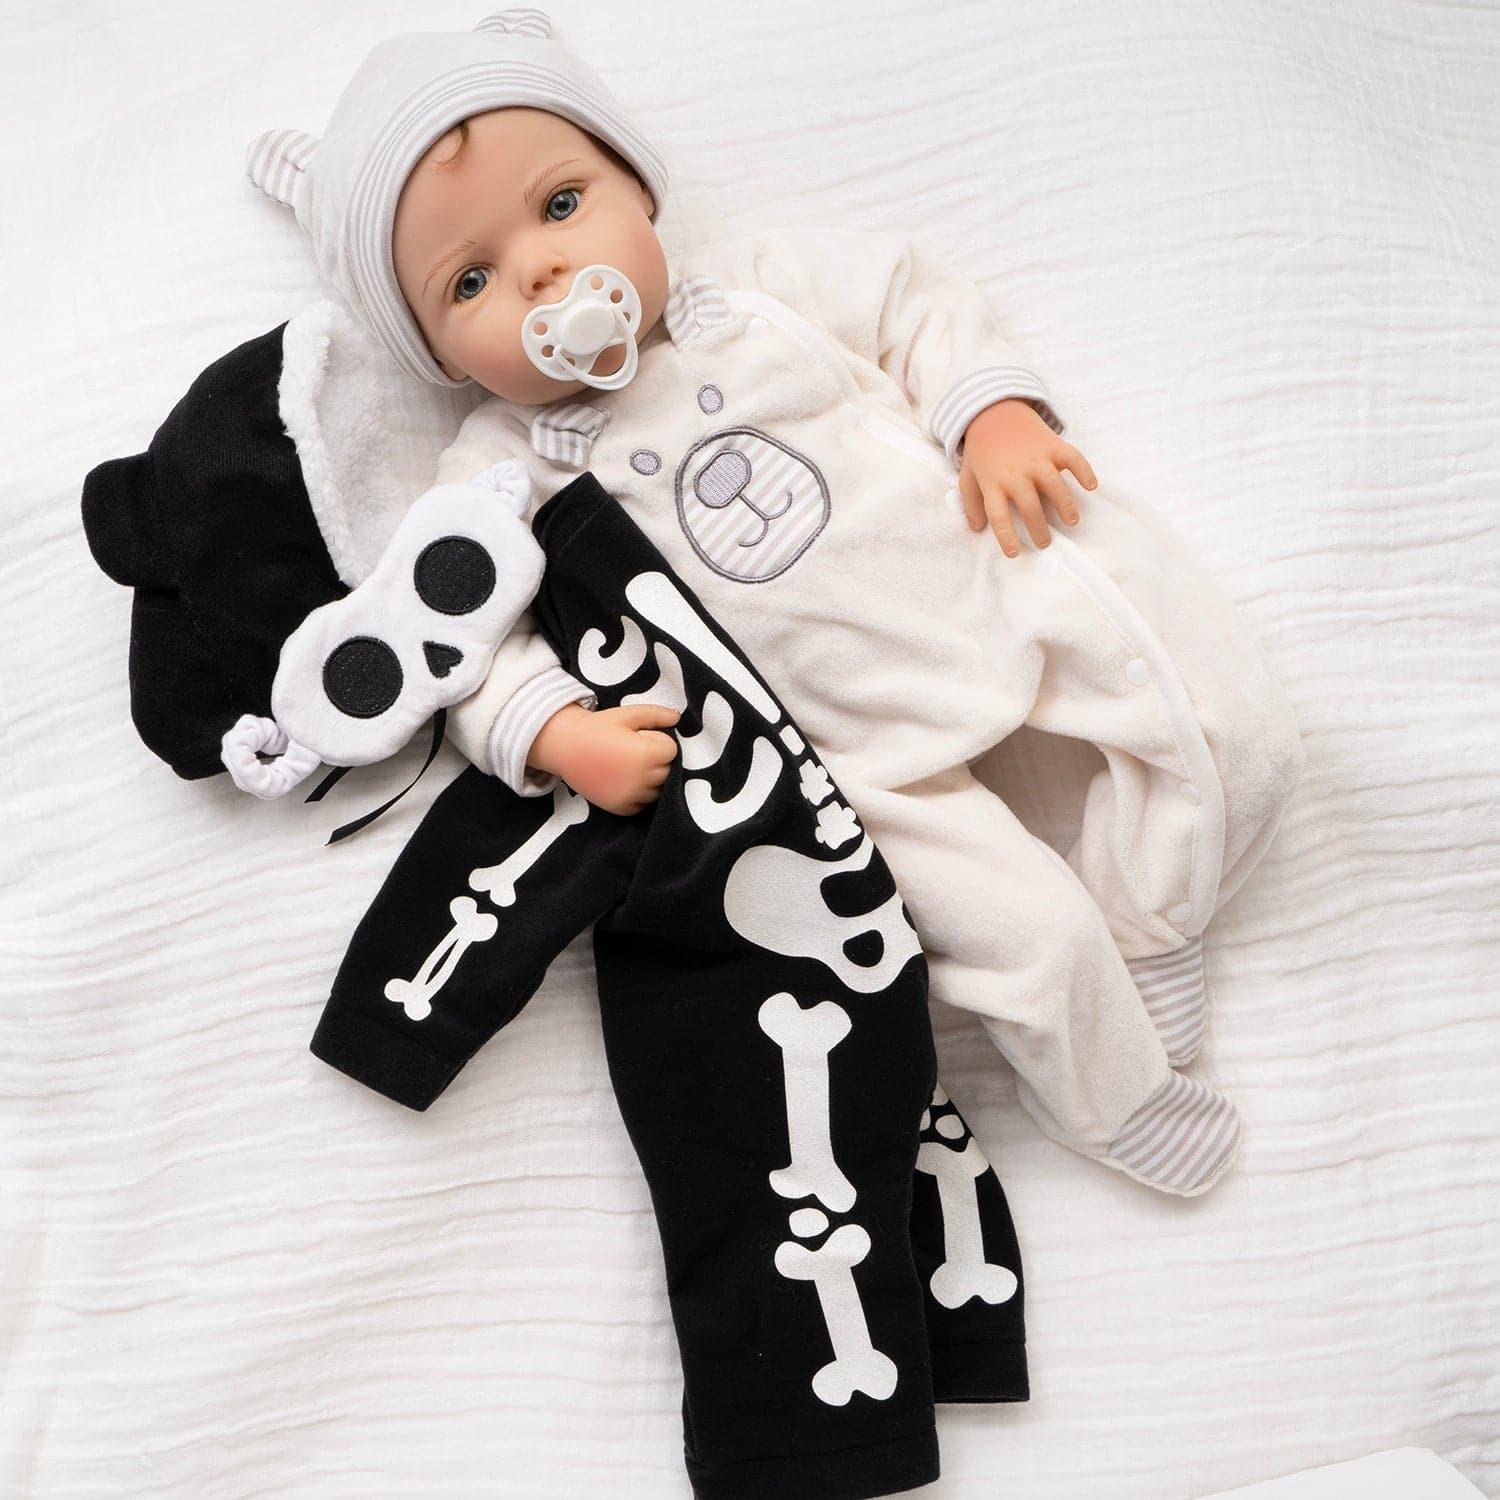 Paradise Galleries Halloween Reborn Toddler Baby Doll Peek-A-Boo